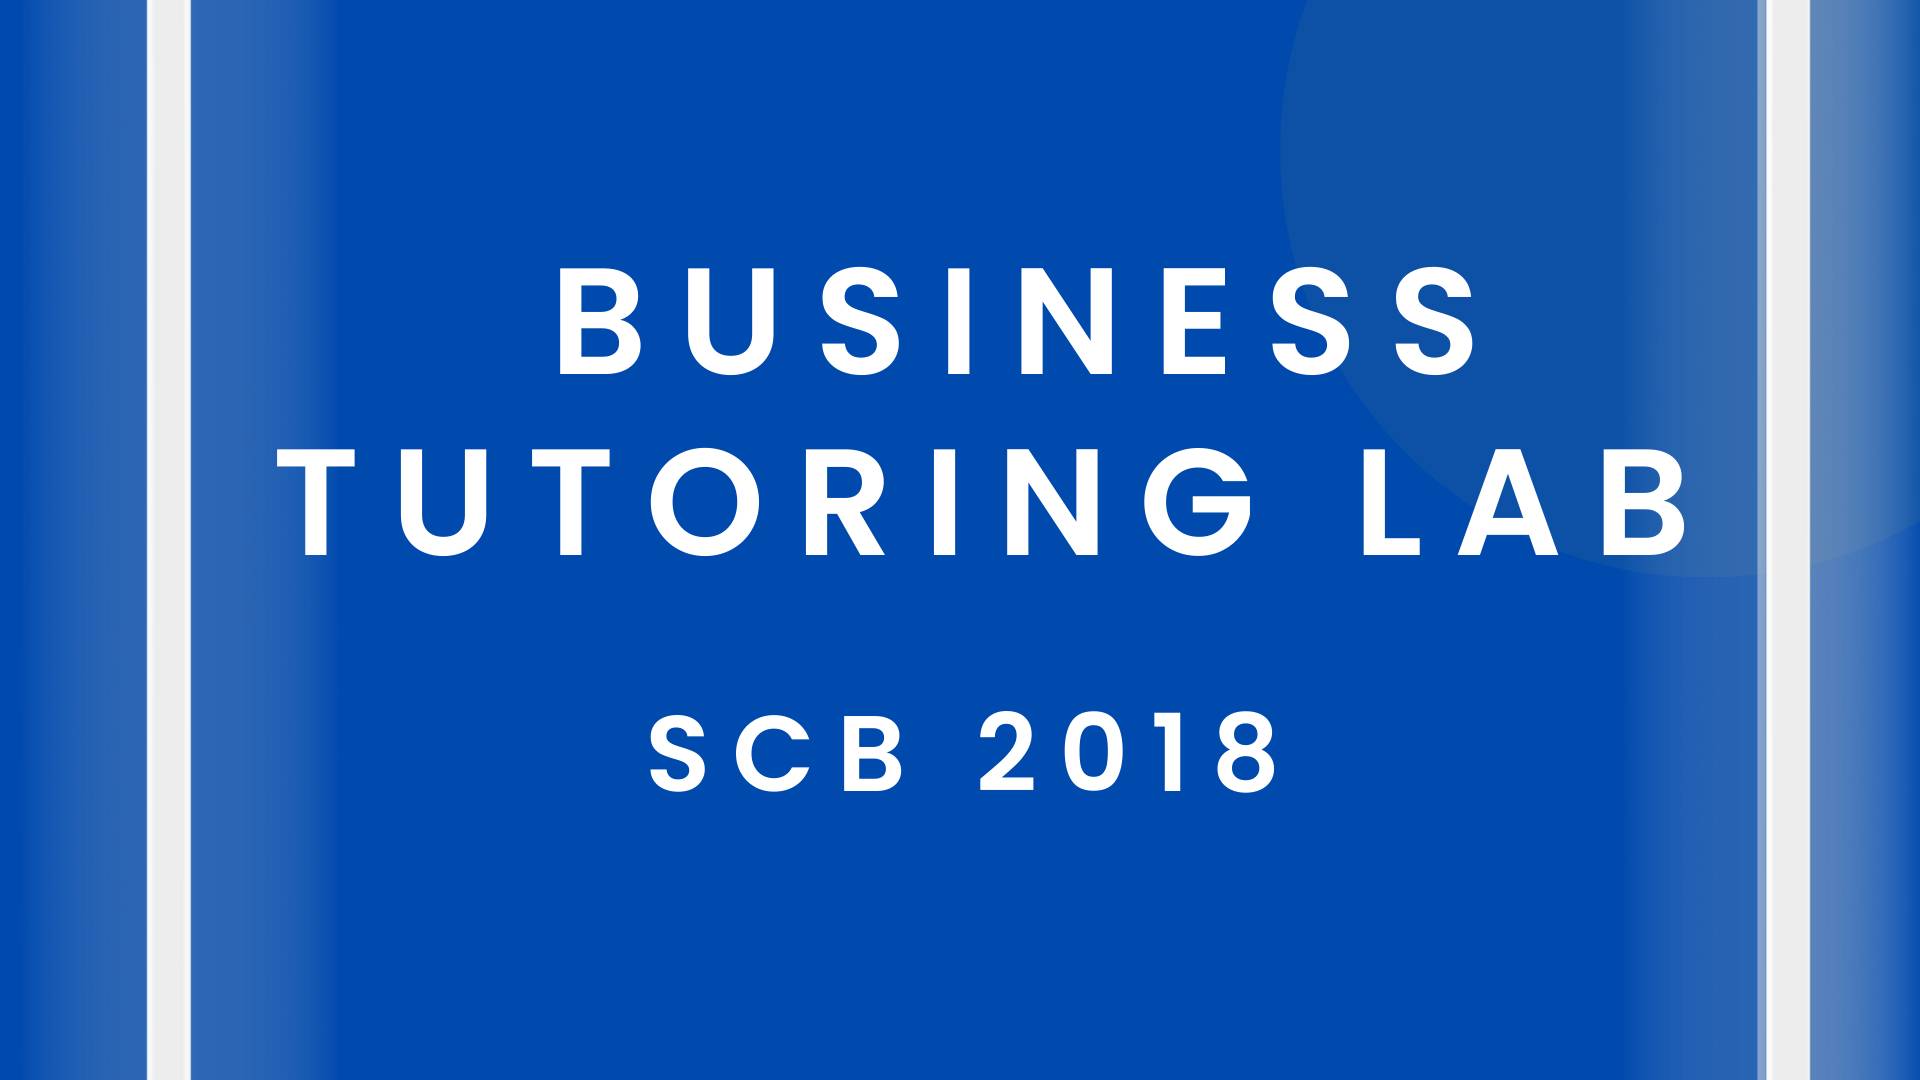 Business Tutoring Lab SCB 2018